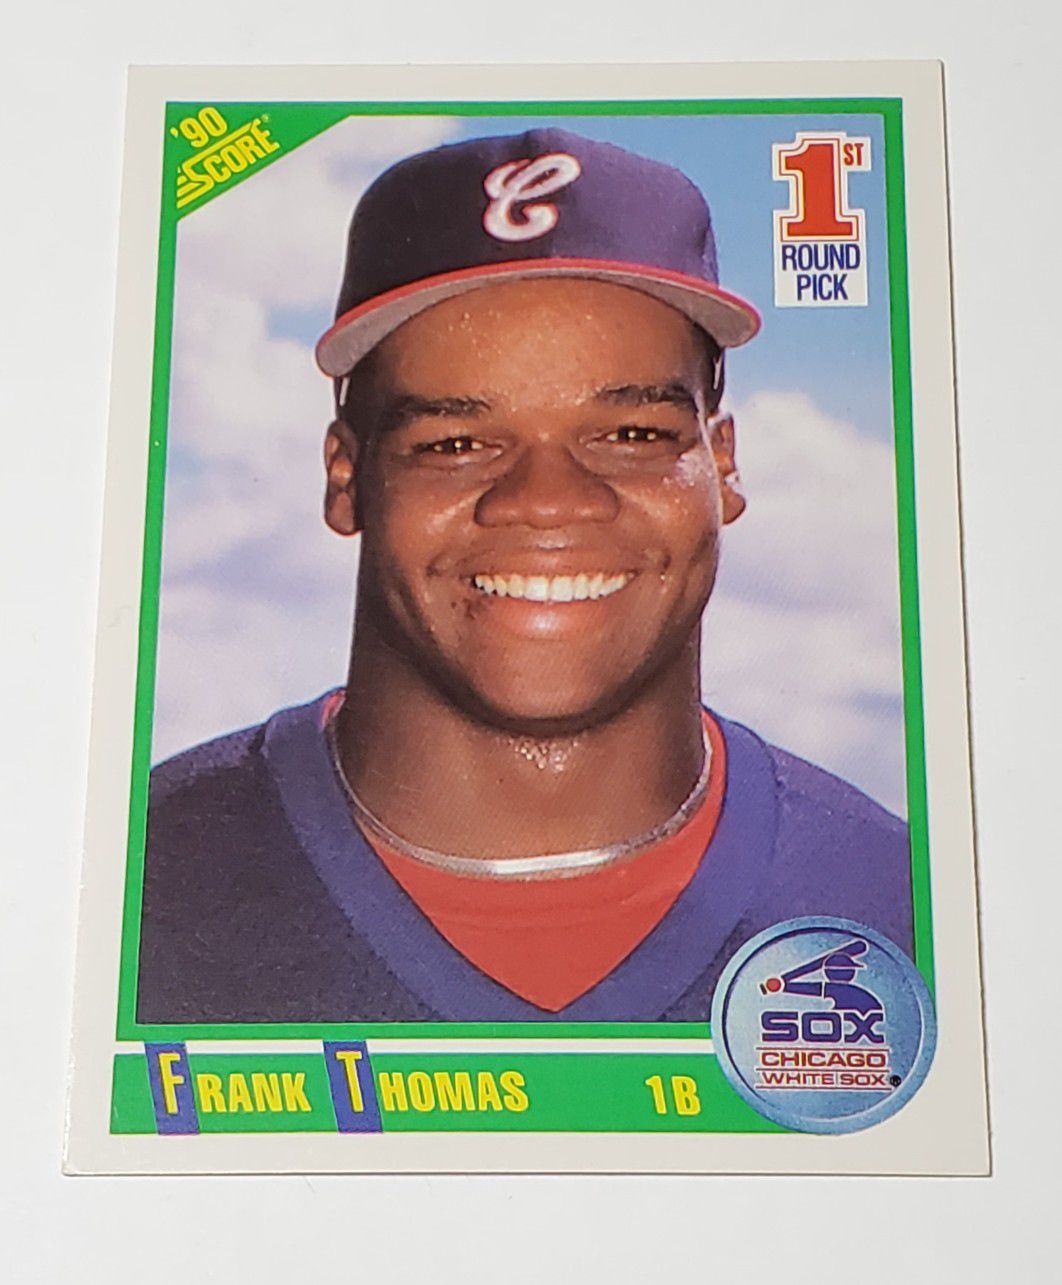 1990 Frank Thomas RC Baseball Card